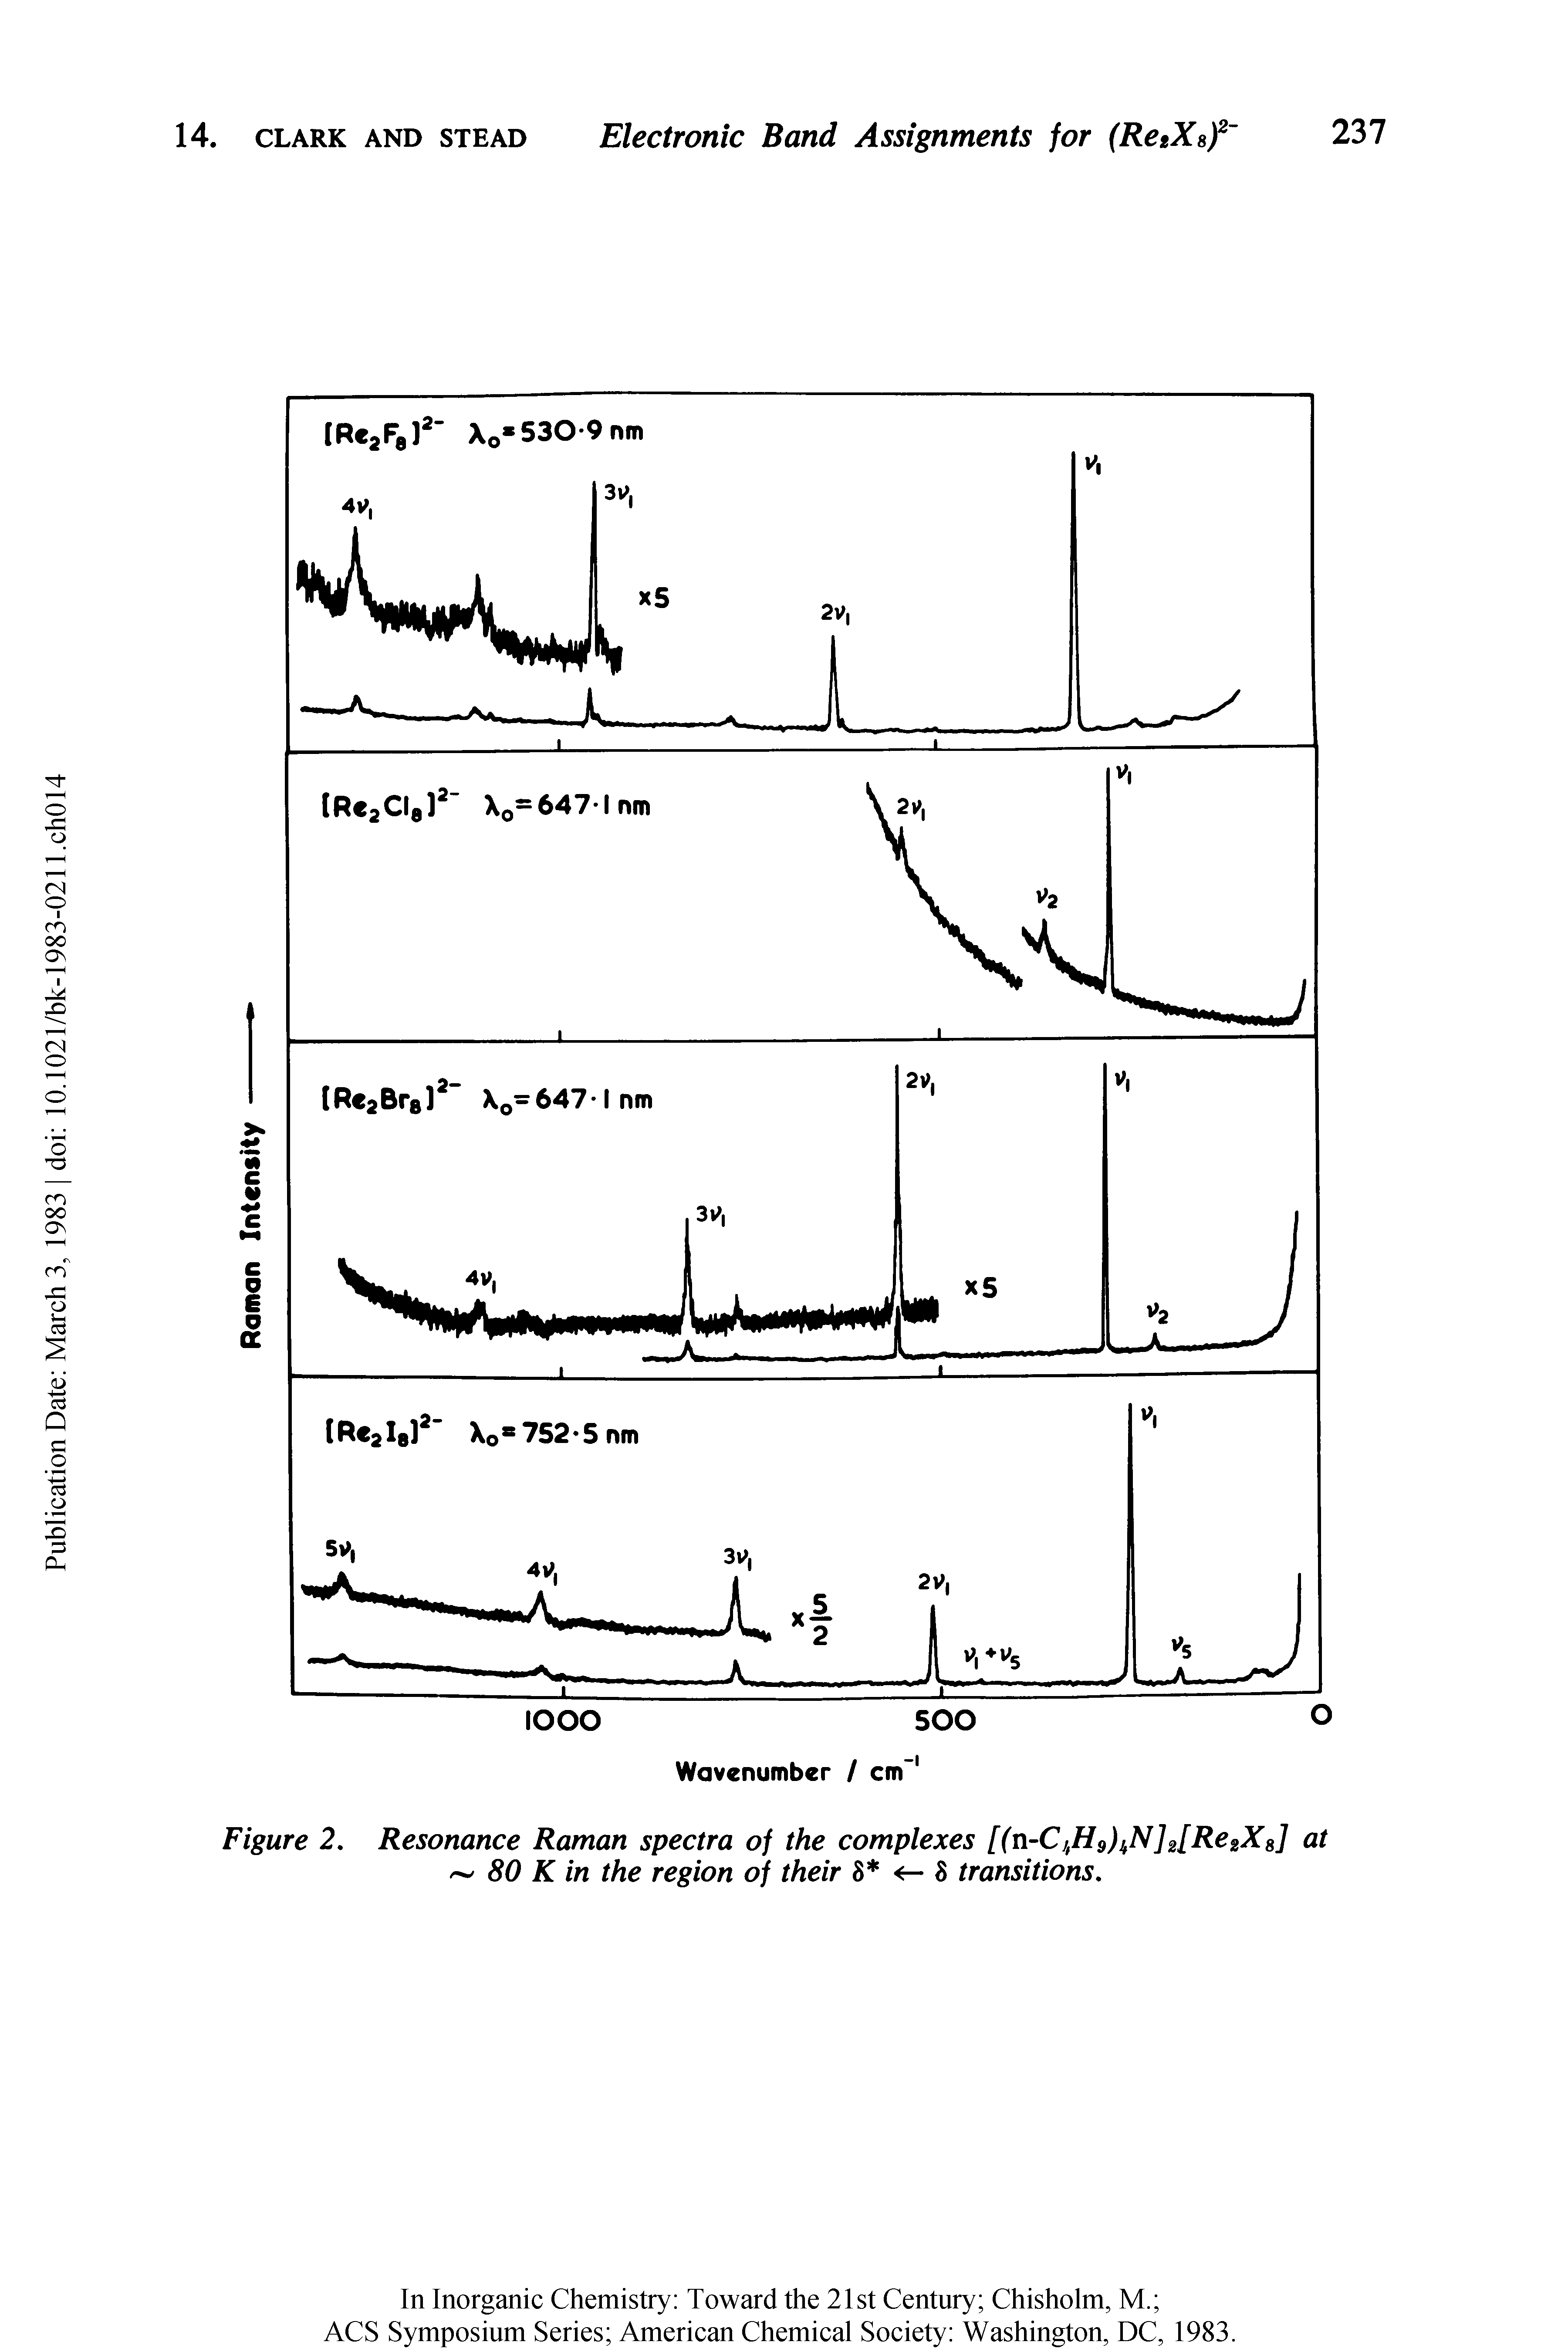 Figure 2, Resonance Raman spectra of the complexes [(n-C/lH9) N]2[Re2X8] at 80 K in the region of their 8 <— 8 transitions.